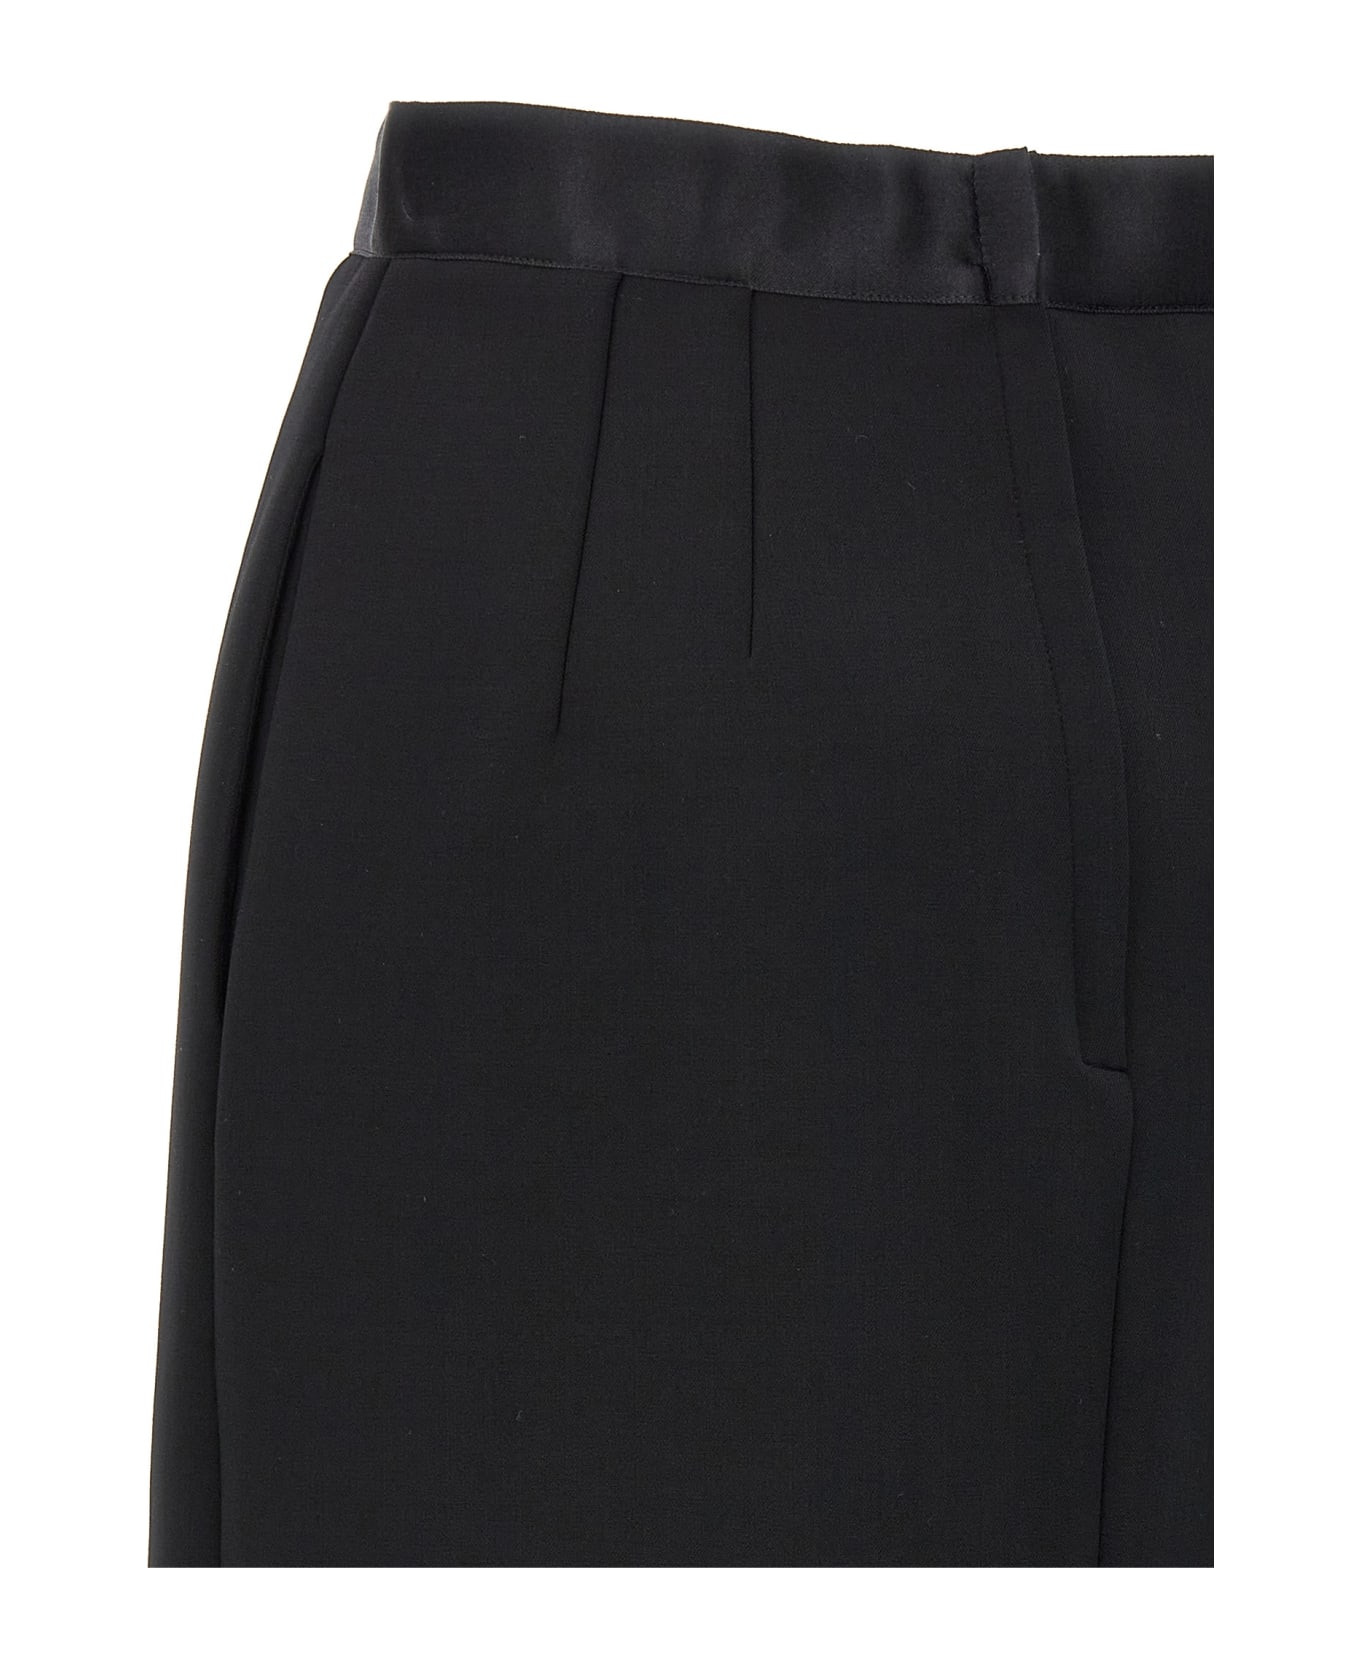 Dolce & Gabbana Wool Pencil Skirt - Black   スカート